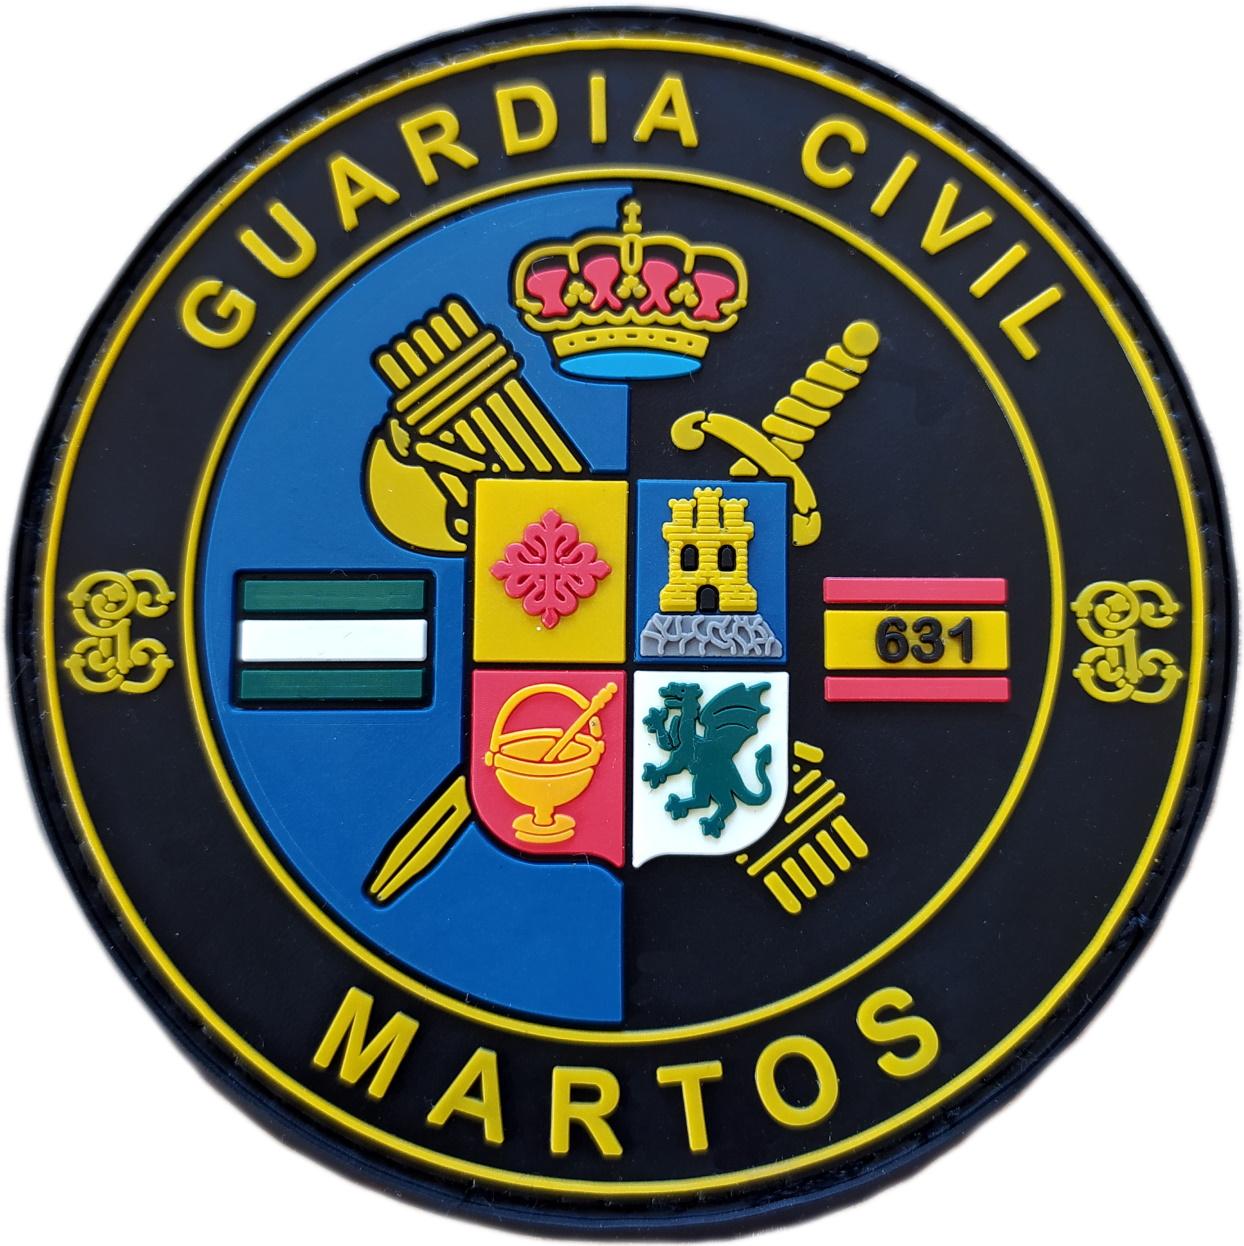 Guardia Civil Martos Jaén parche insignia emblema distintivo